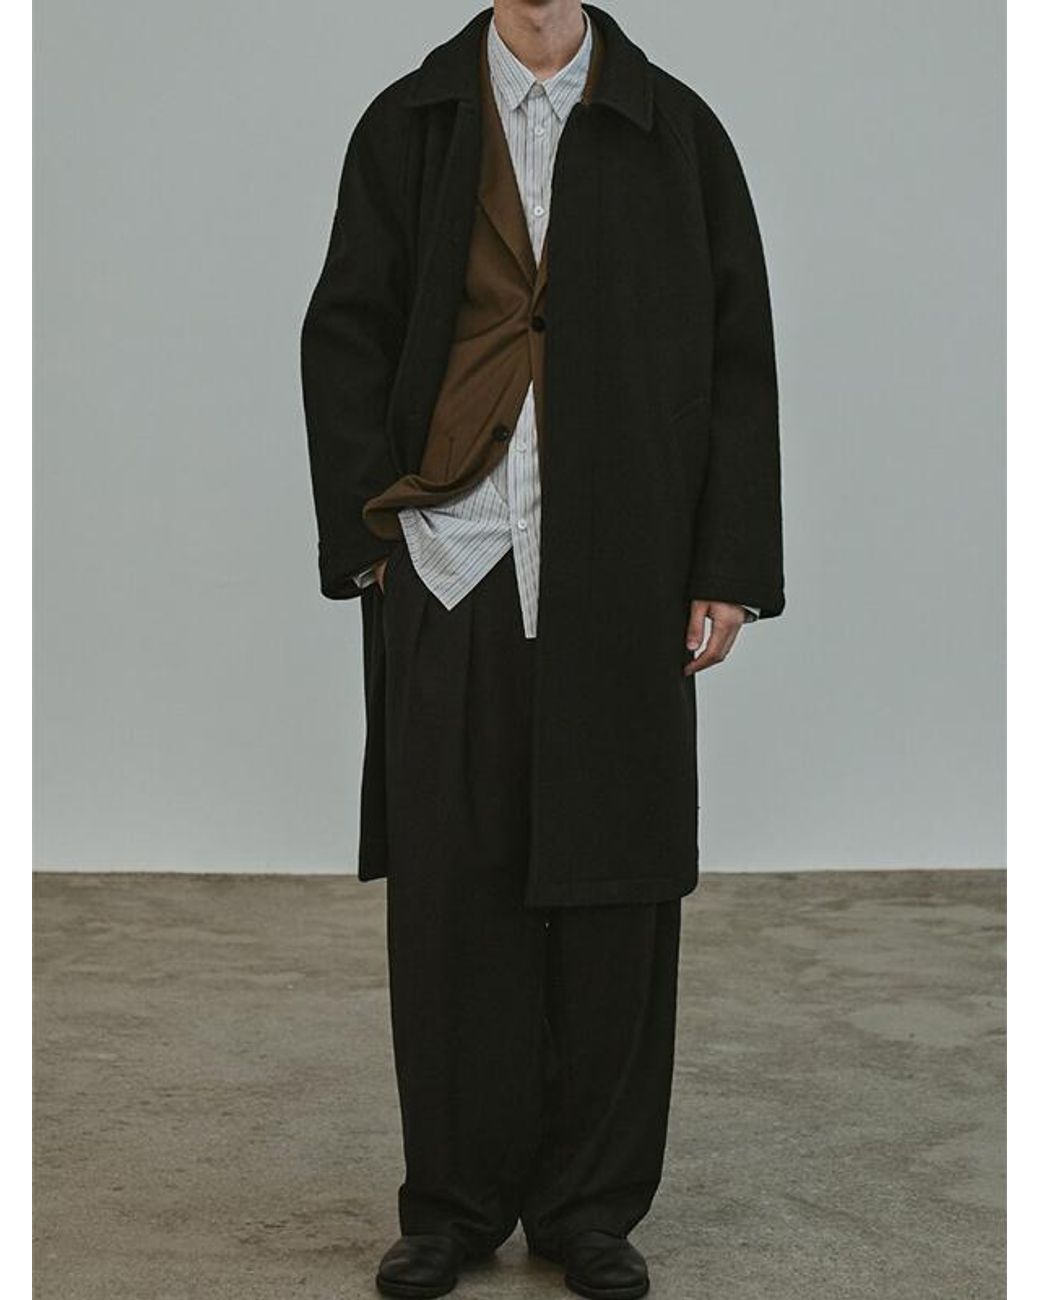 Lord John Grey Wool Balmacaan Coat in Black for Men | Lyst